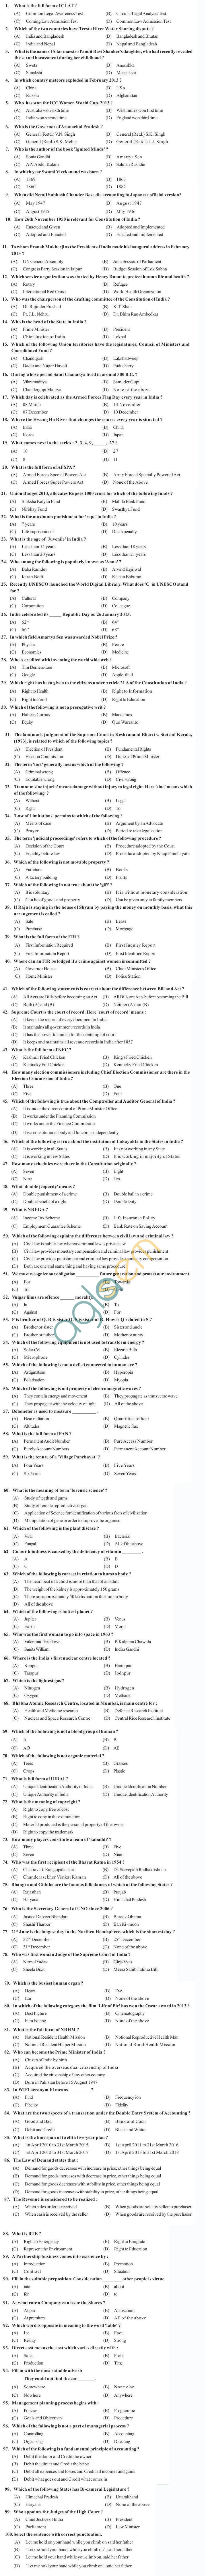 PU B.A./B.Com. LLB. (Hons.) 2013 Question Paper with Answers